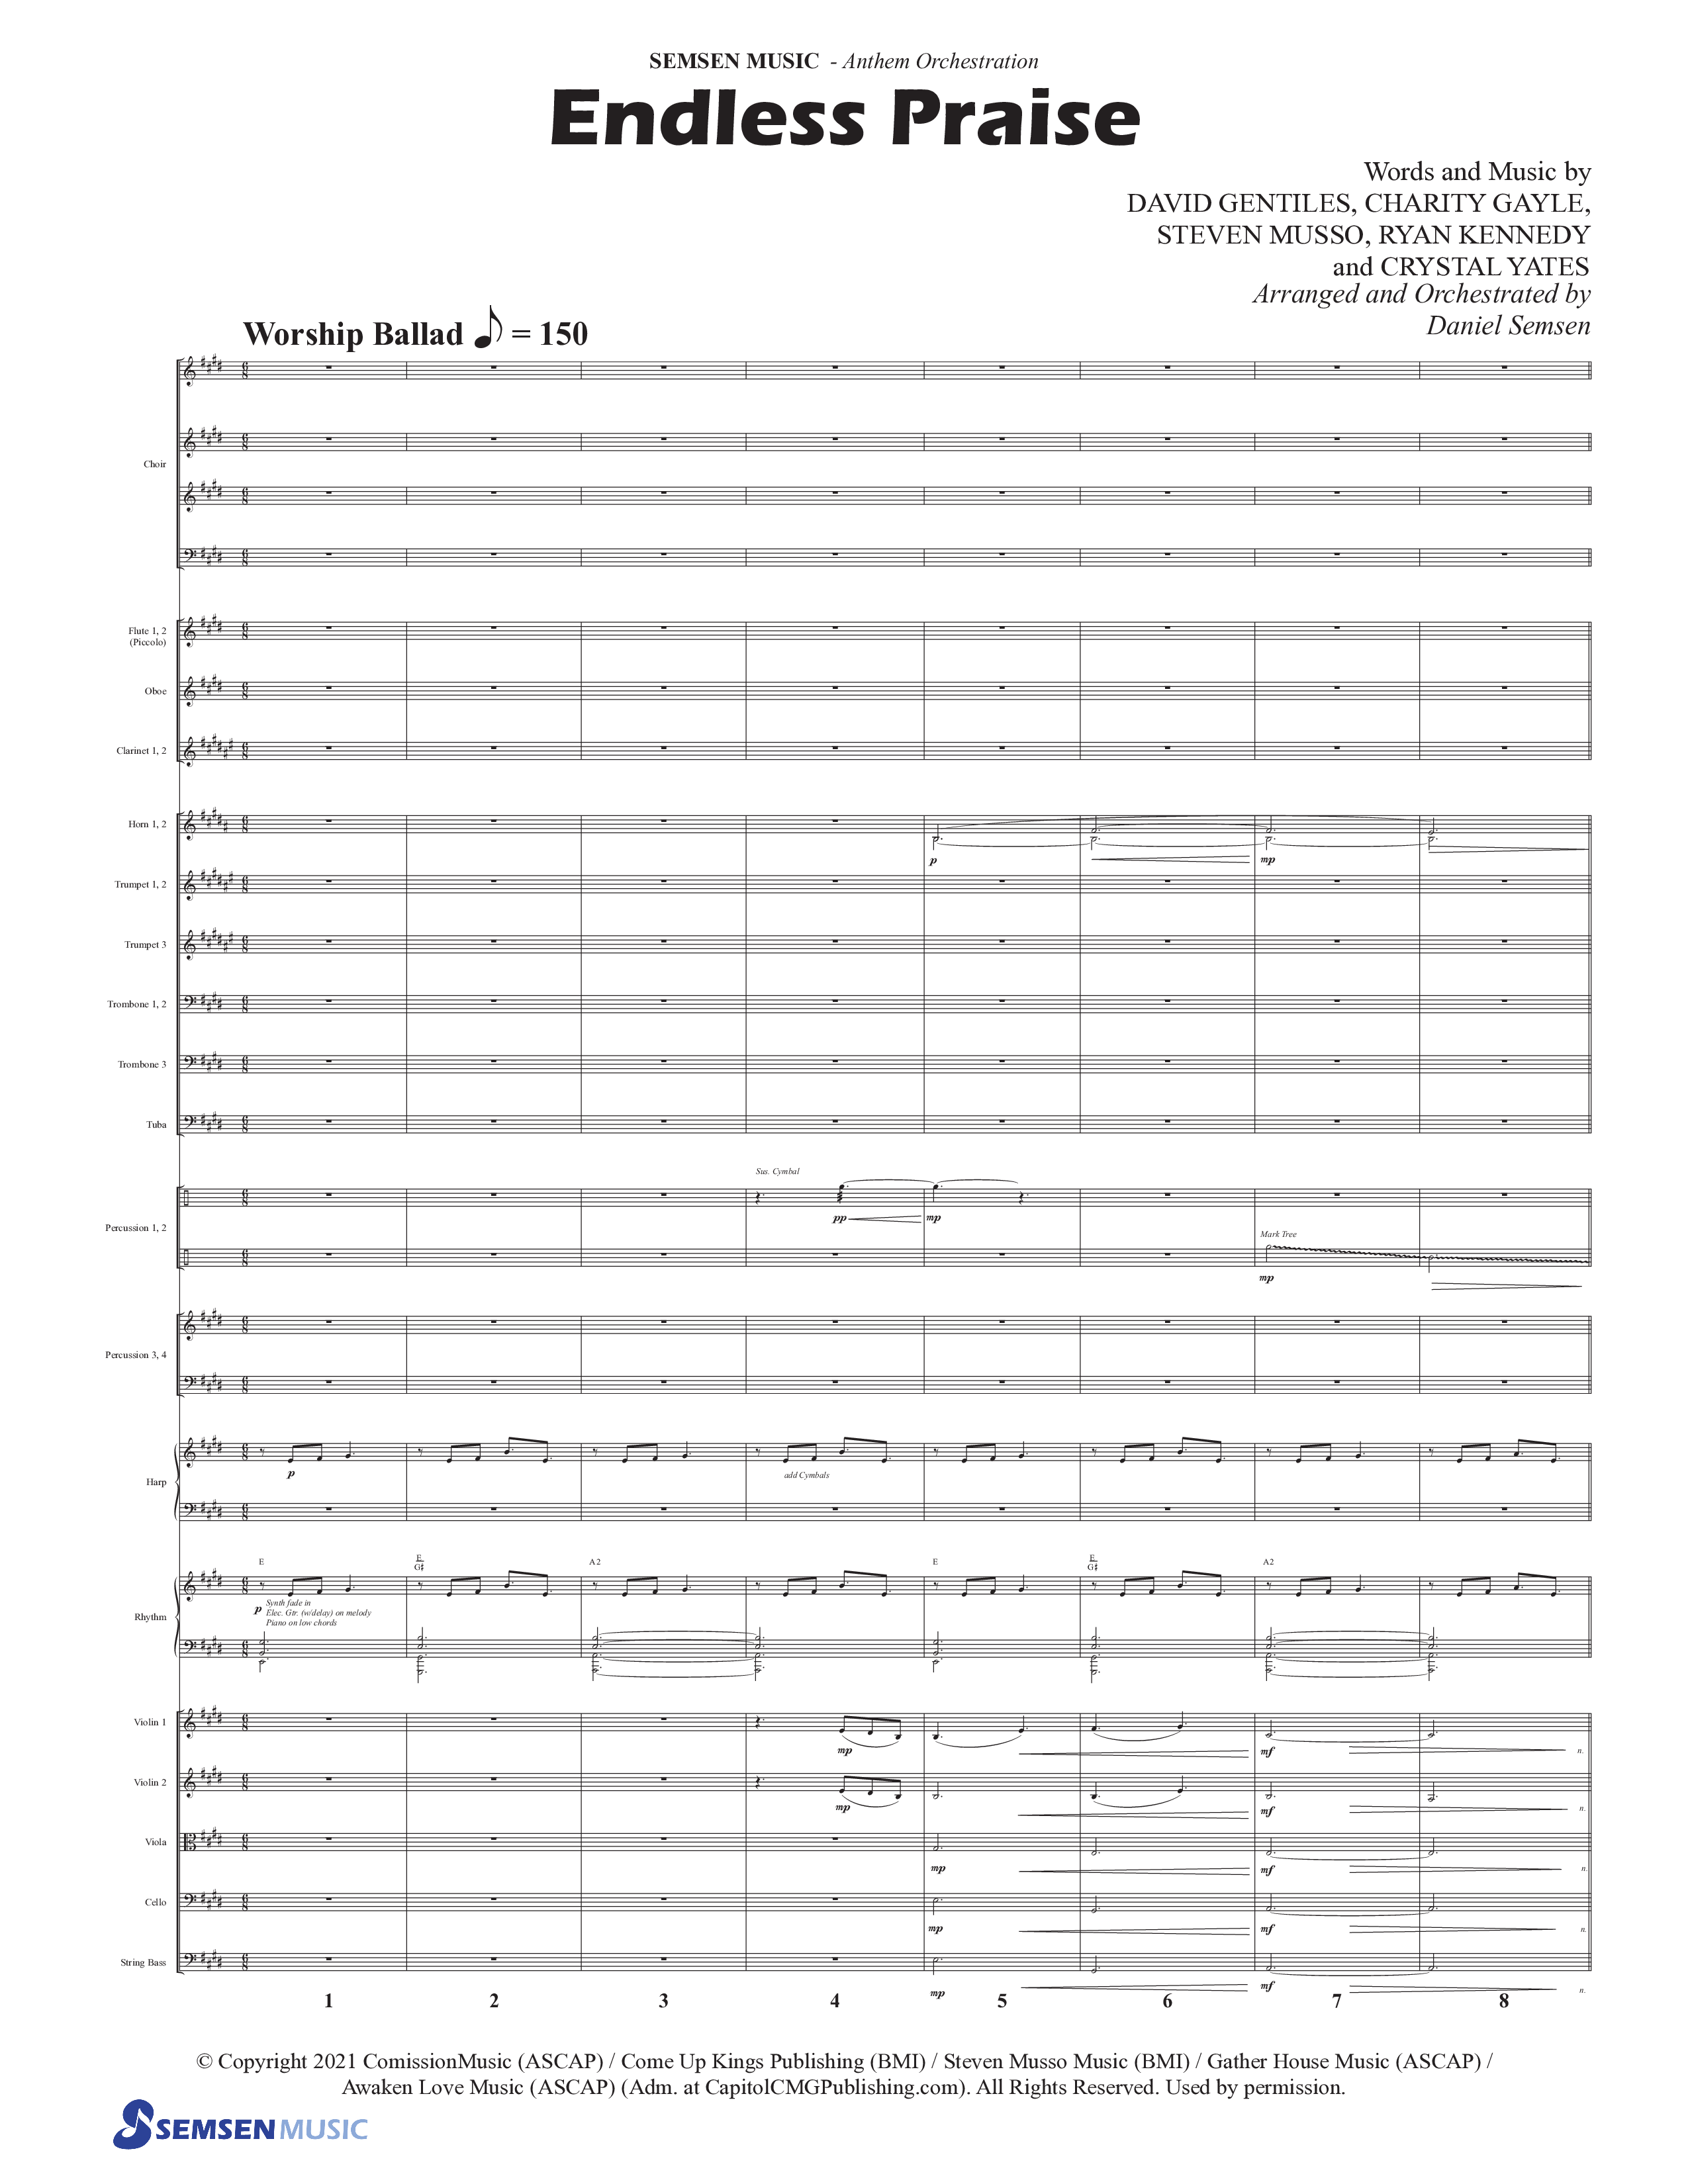 Endless Praise (Choral Anthem SATB) Conductor's Score (Semsen Music / Arr. Daniel Semsen)